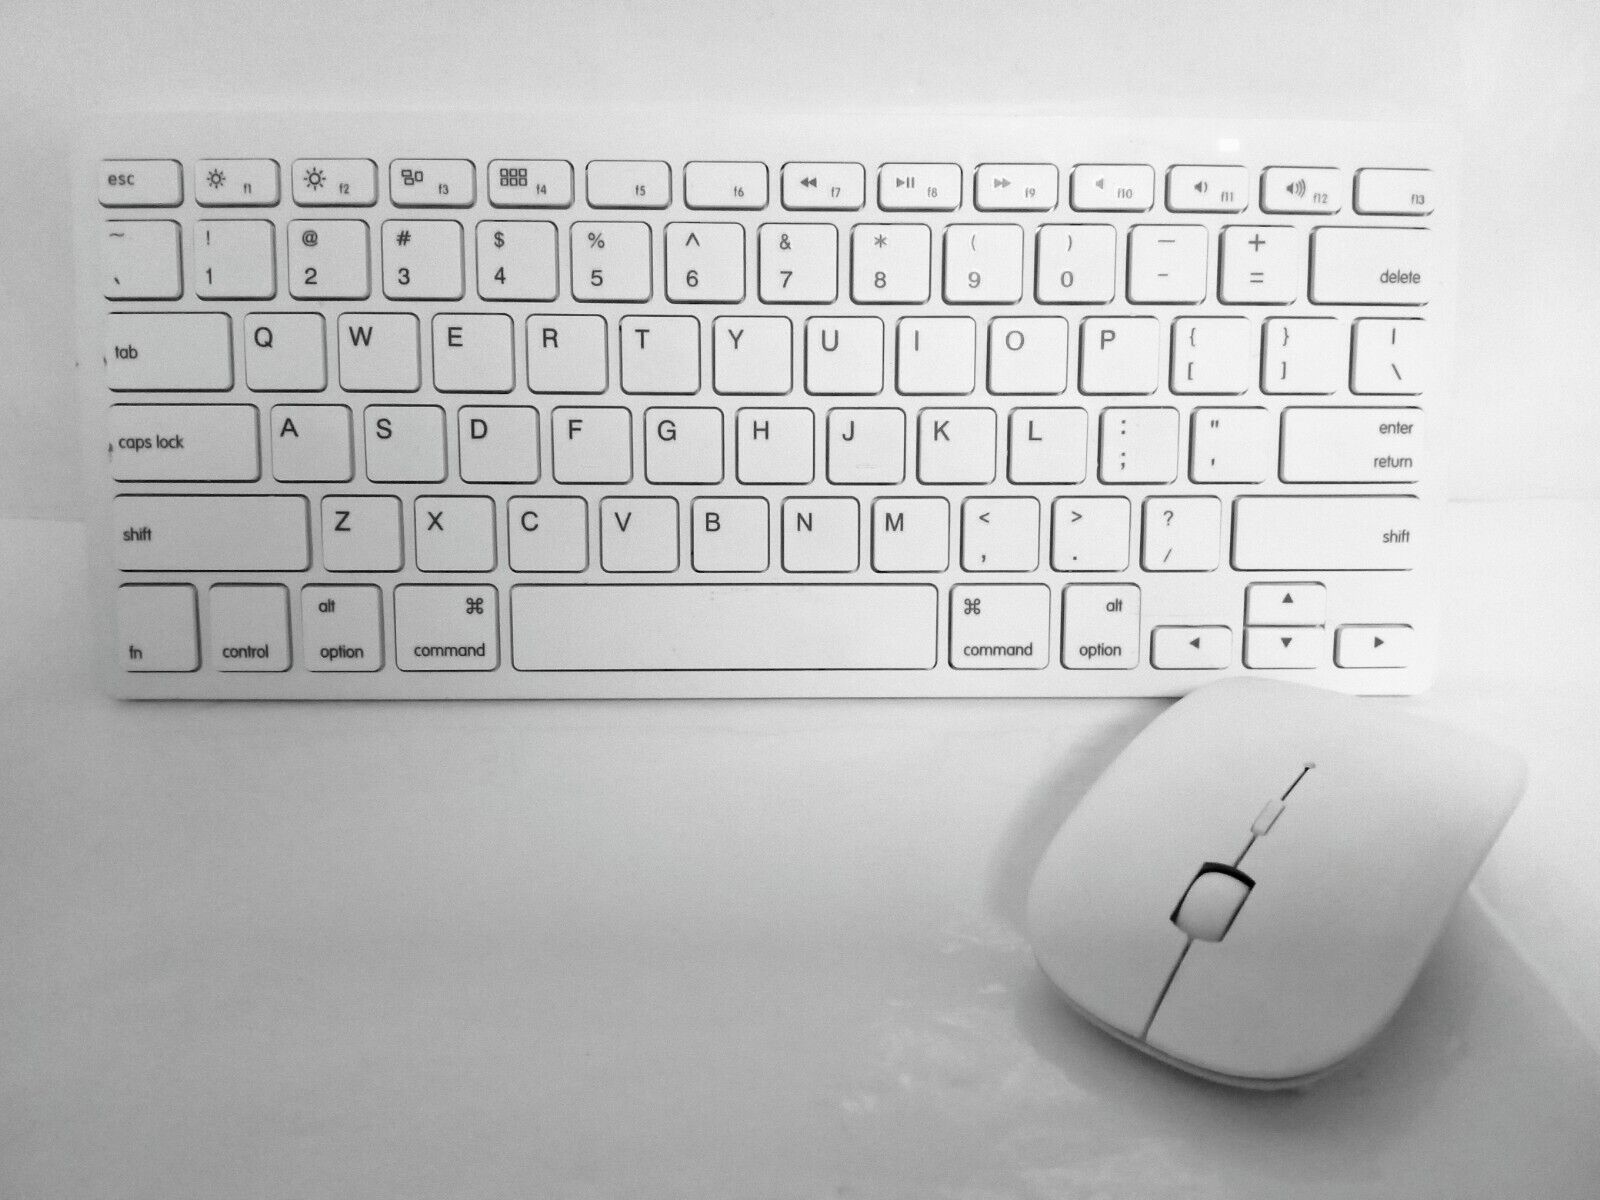 Mason West Slim Wireless Keyboard & Mouse Combo - White for PC/Mac/Windows